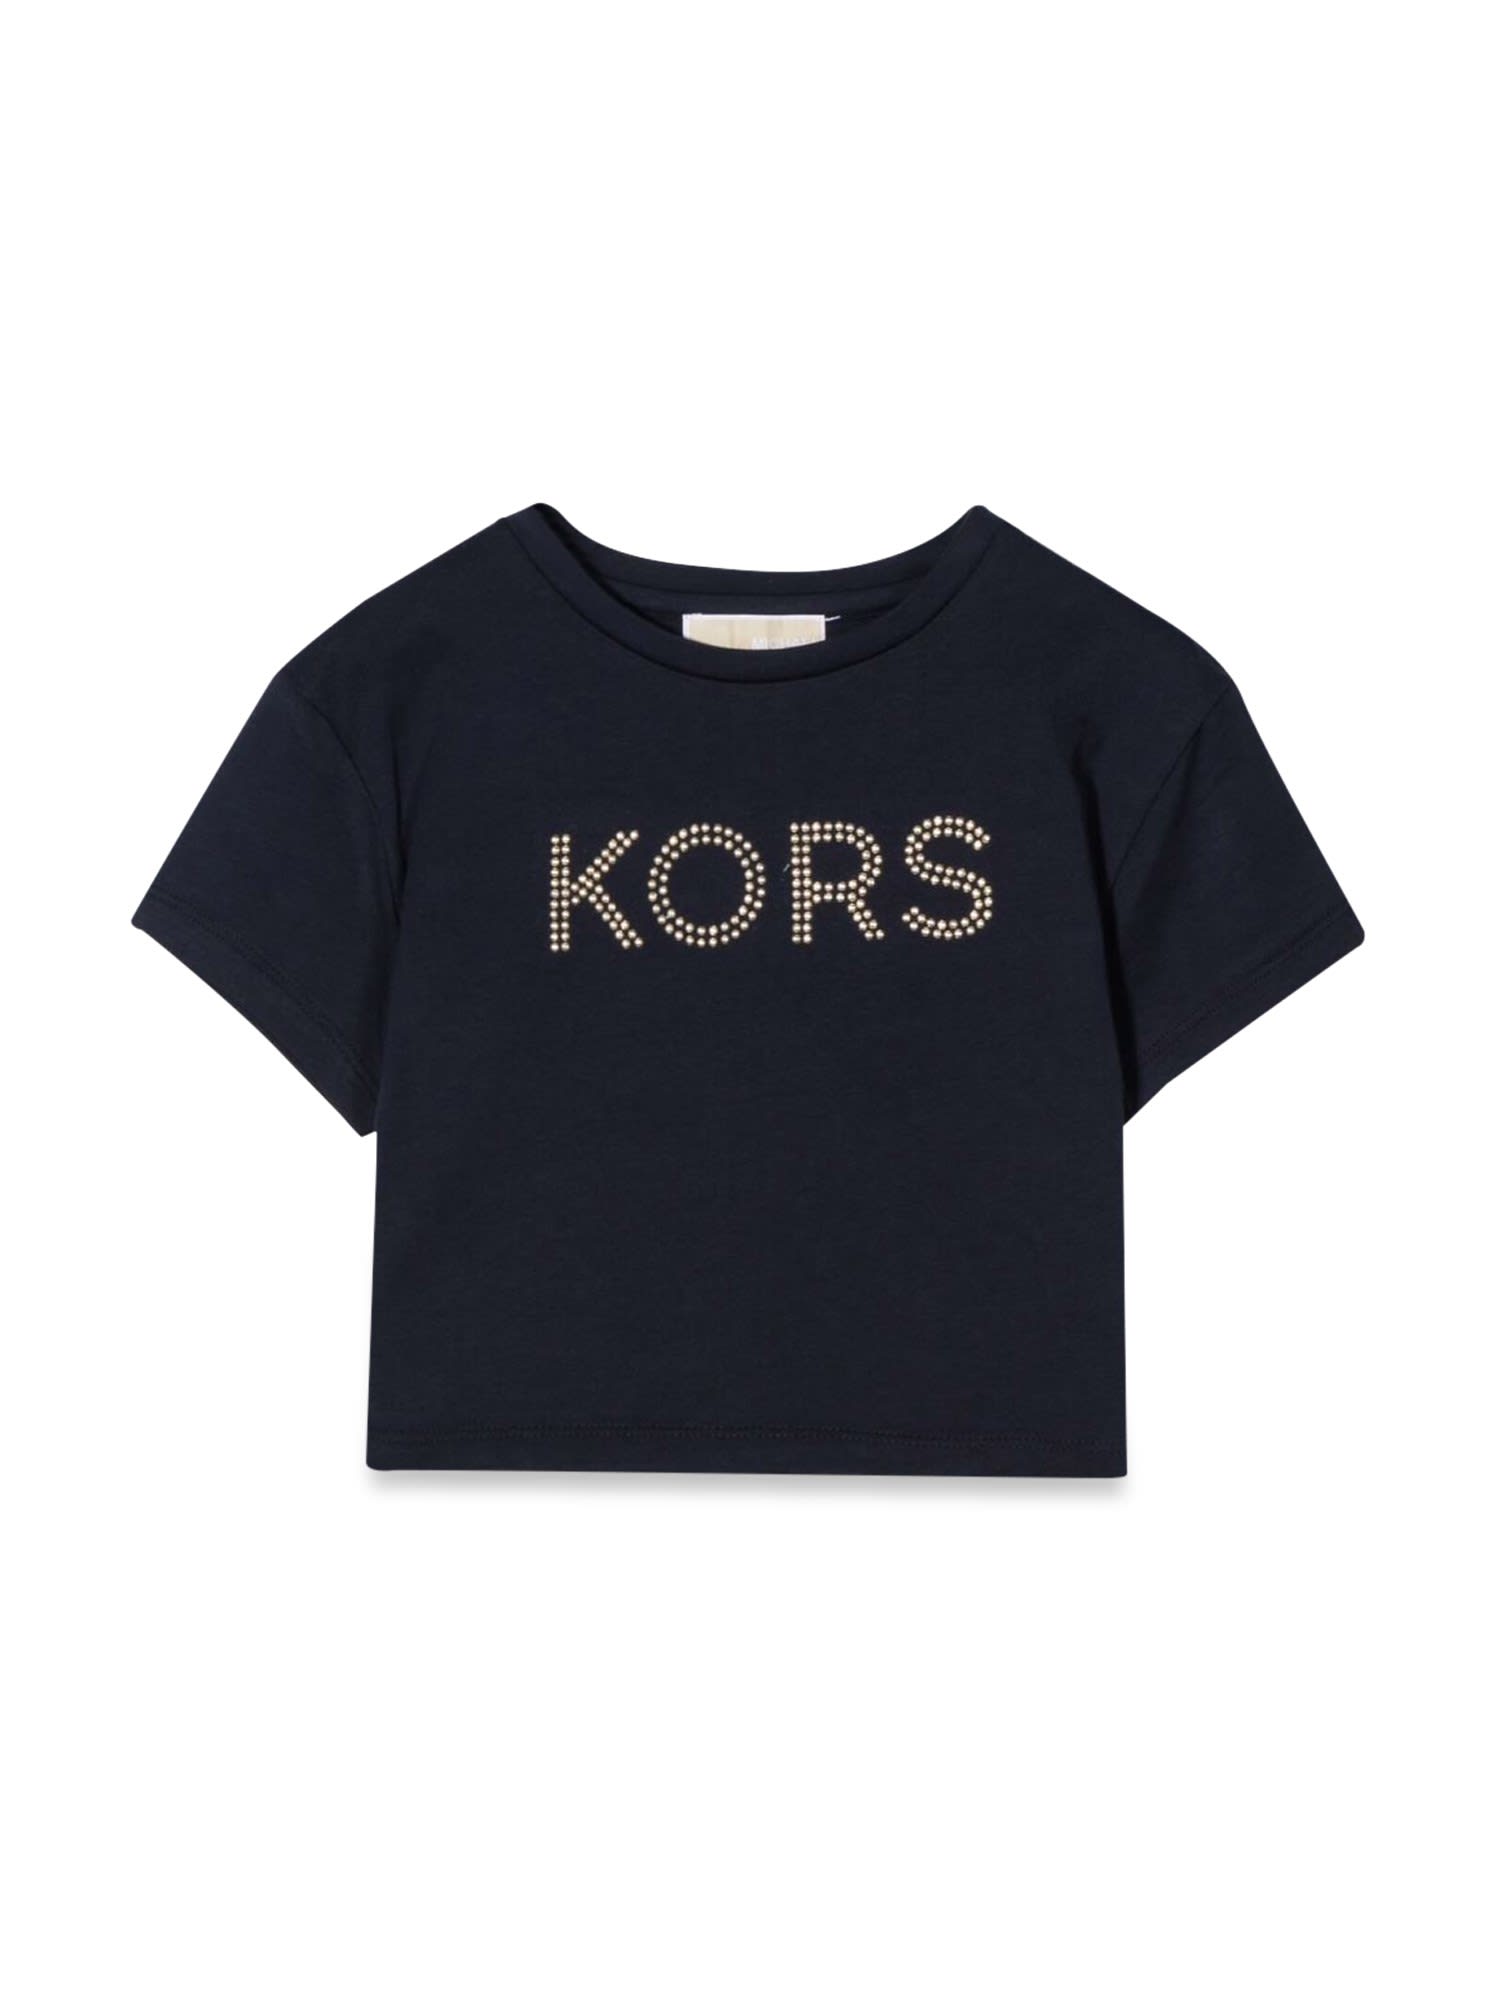 Michael Kors Tee Shirt